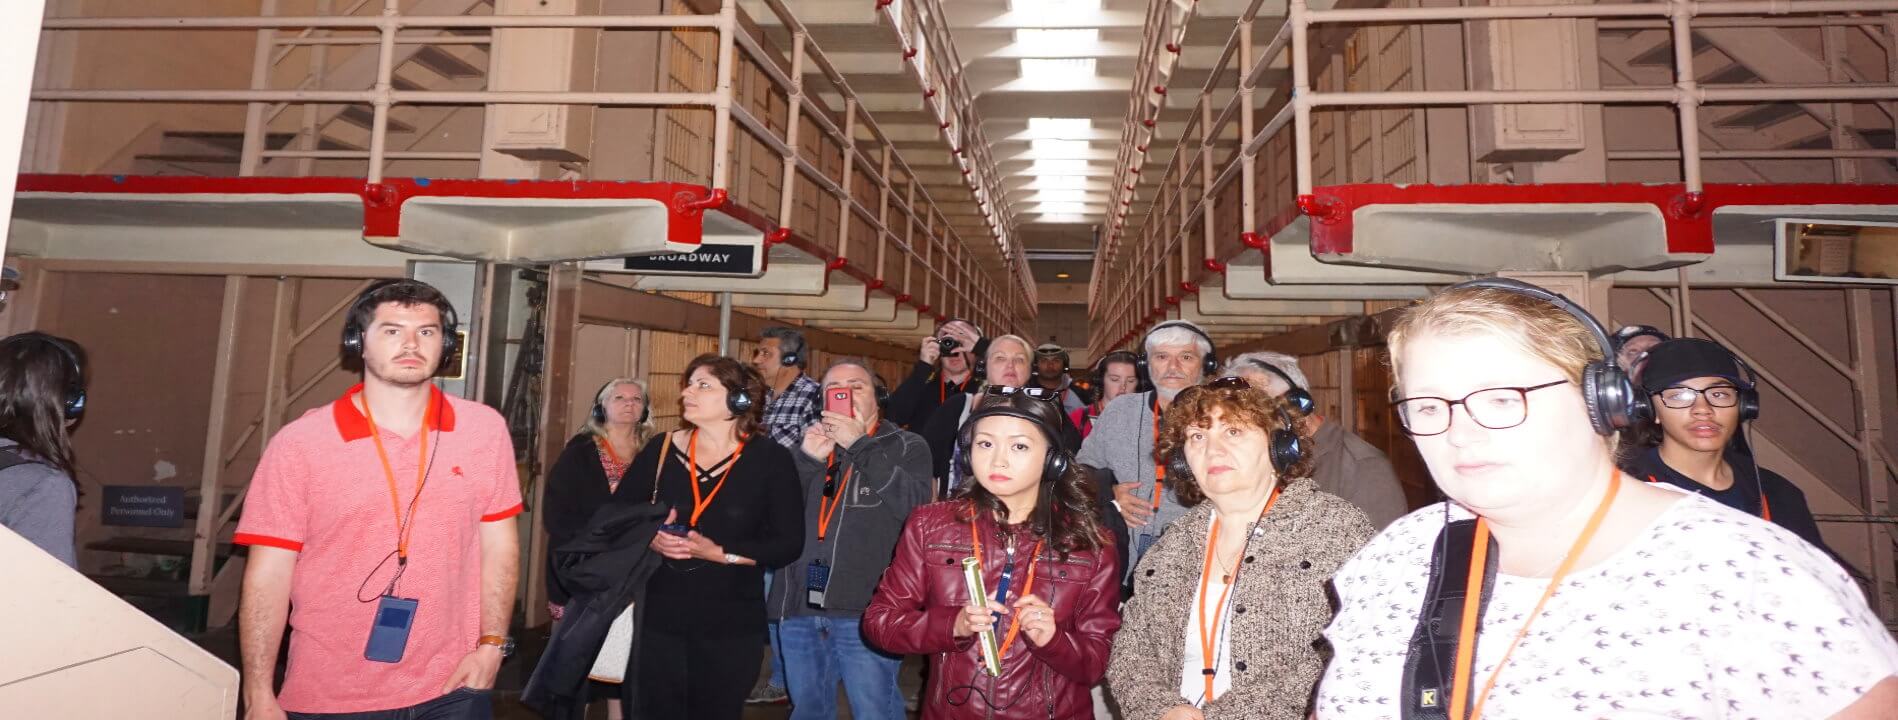 inside_alcatraz_island_prison_cellhouse_audio_tour